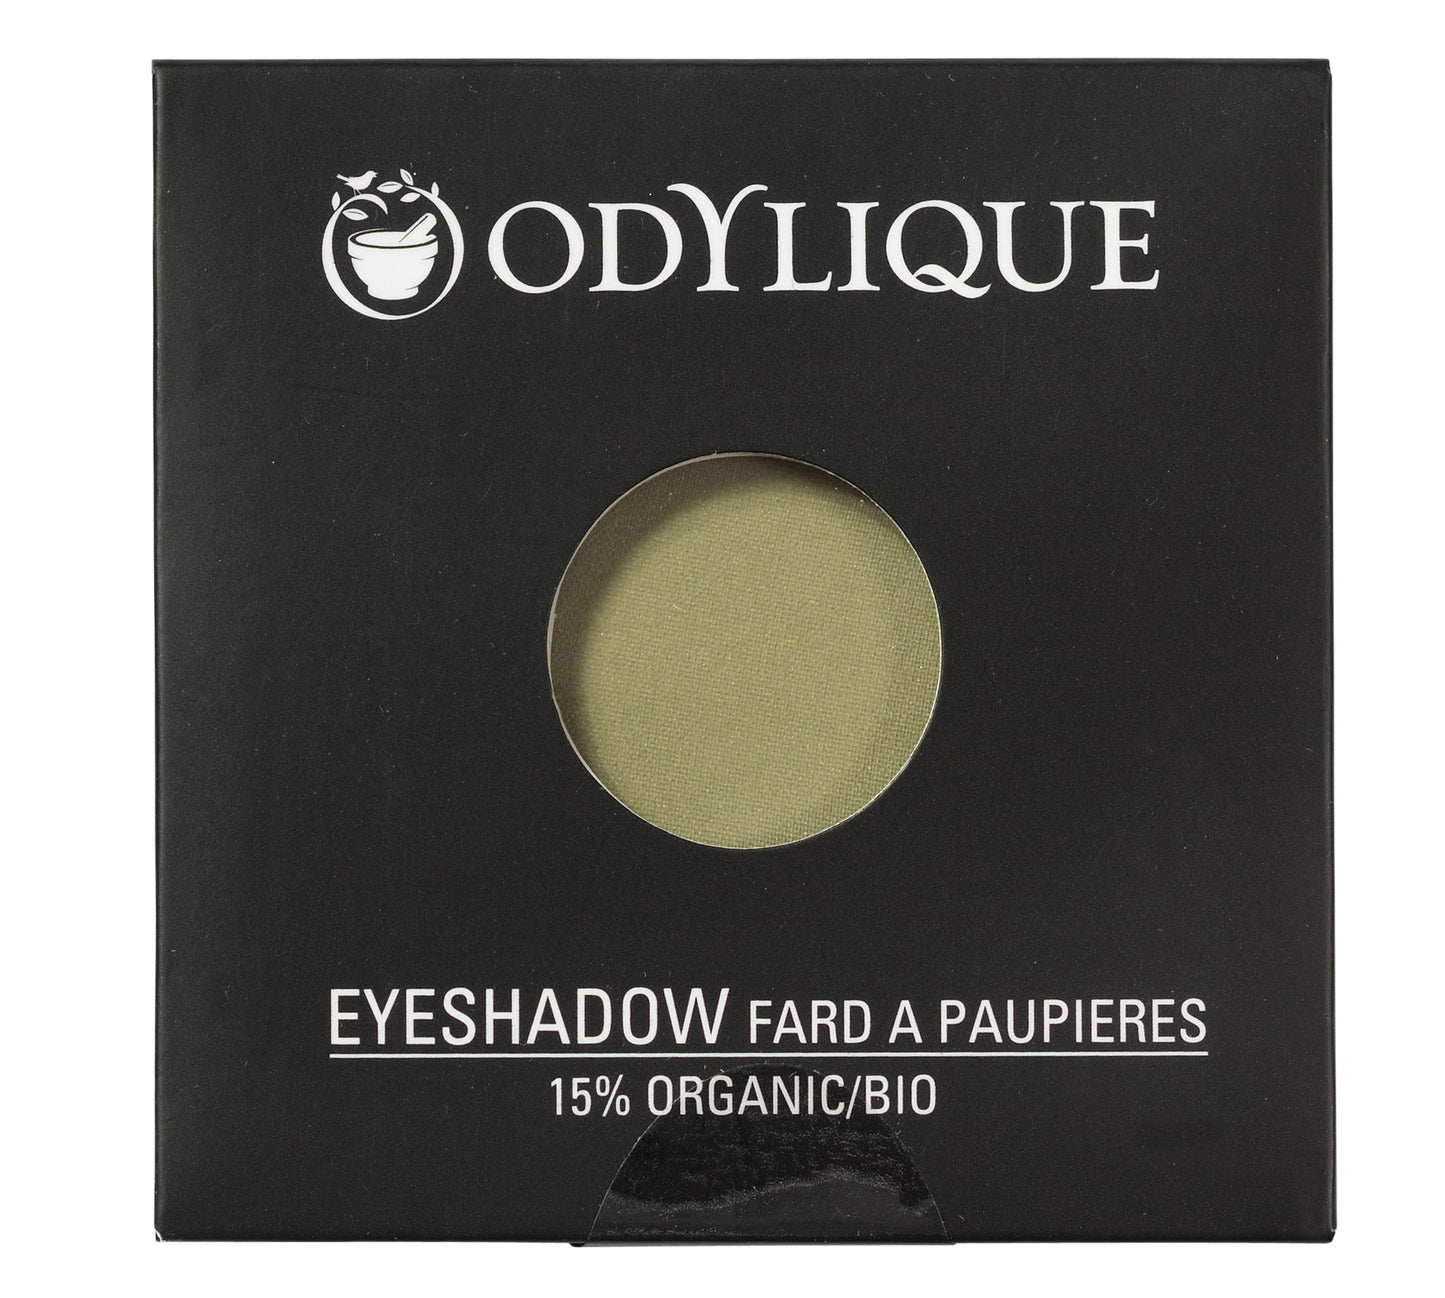 Single pan Odylique organic eyeshadow in shade Seaweed, placed in its black packaging.